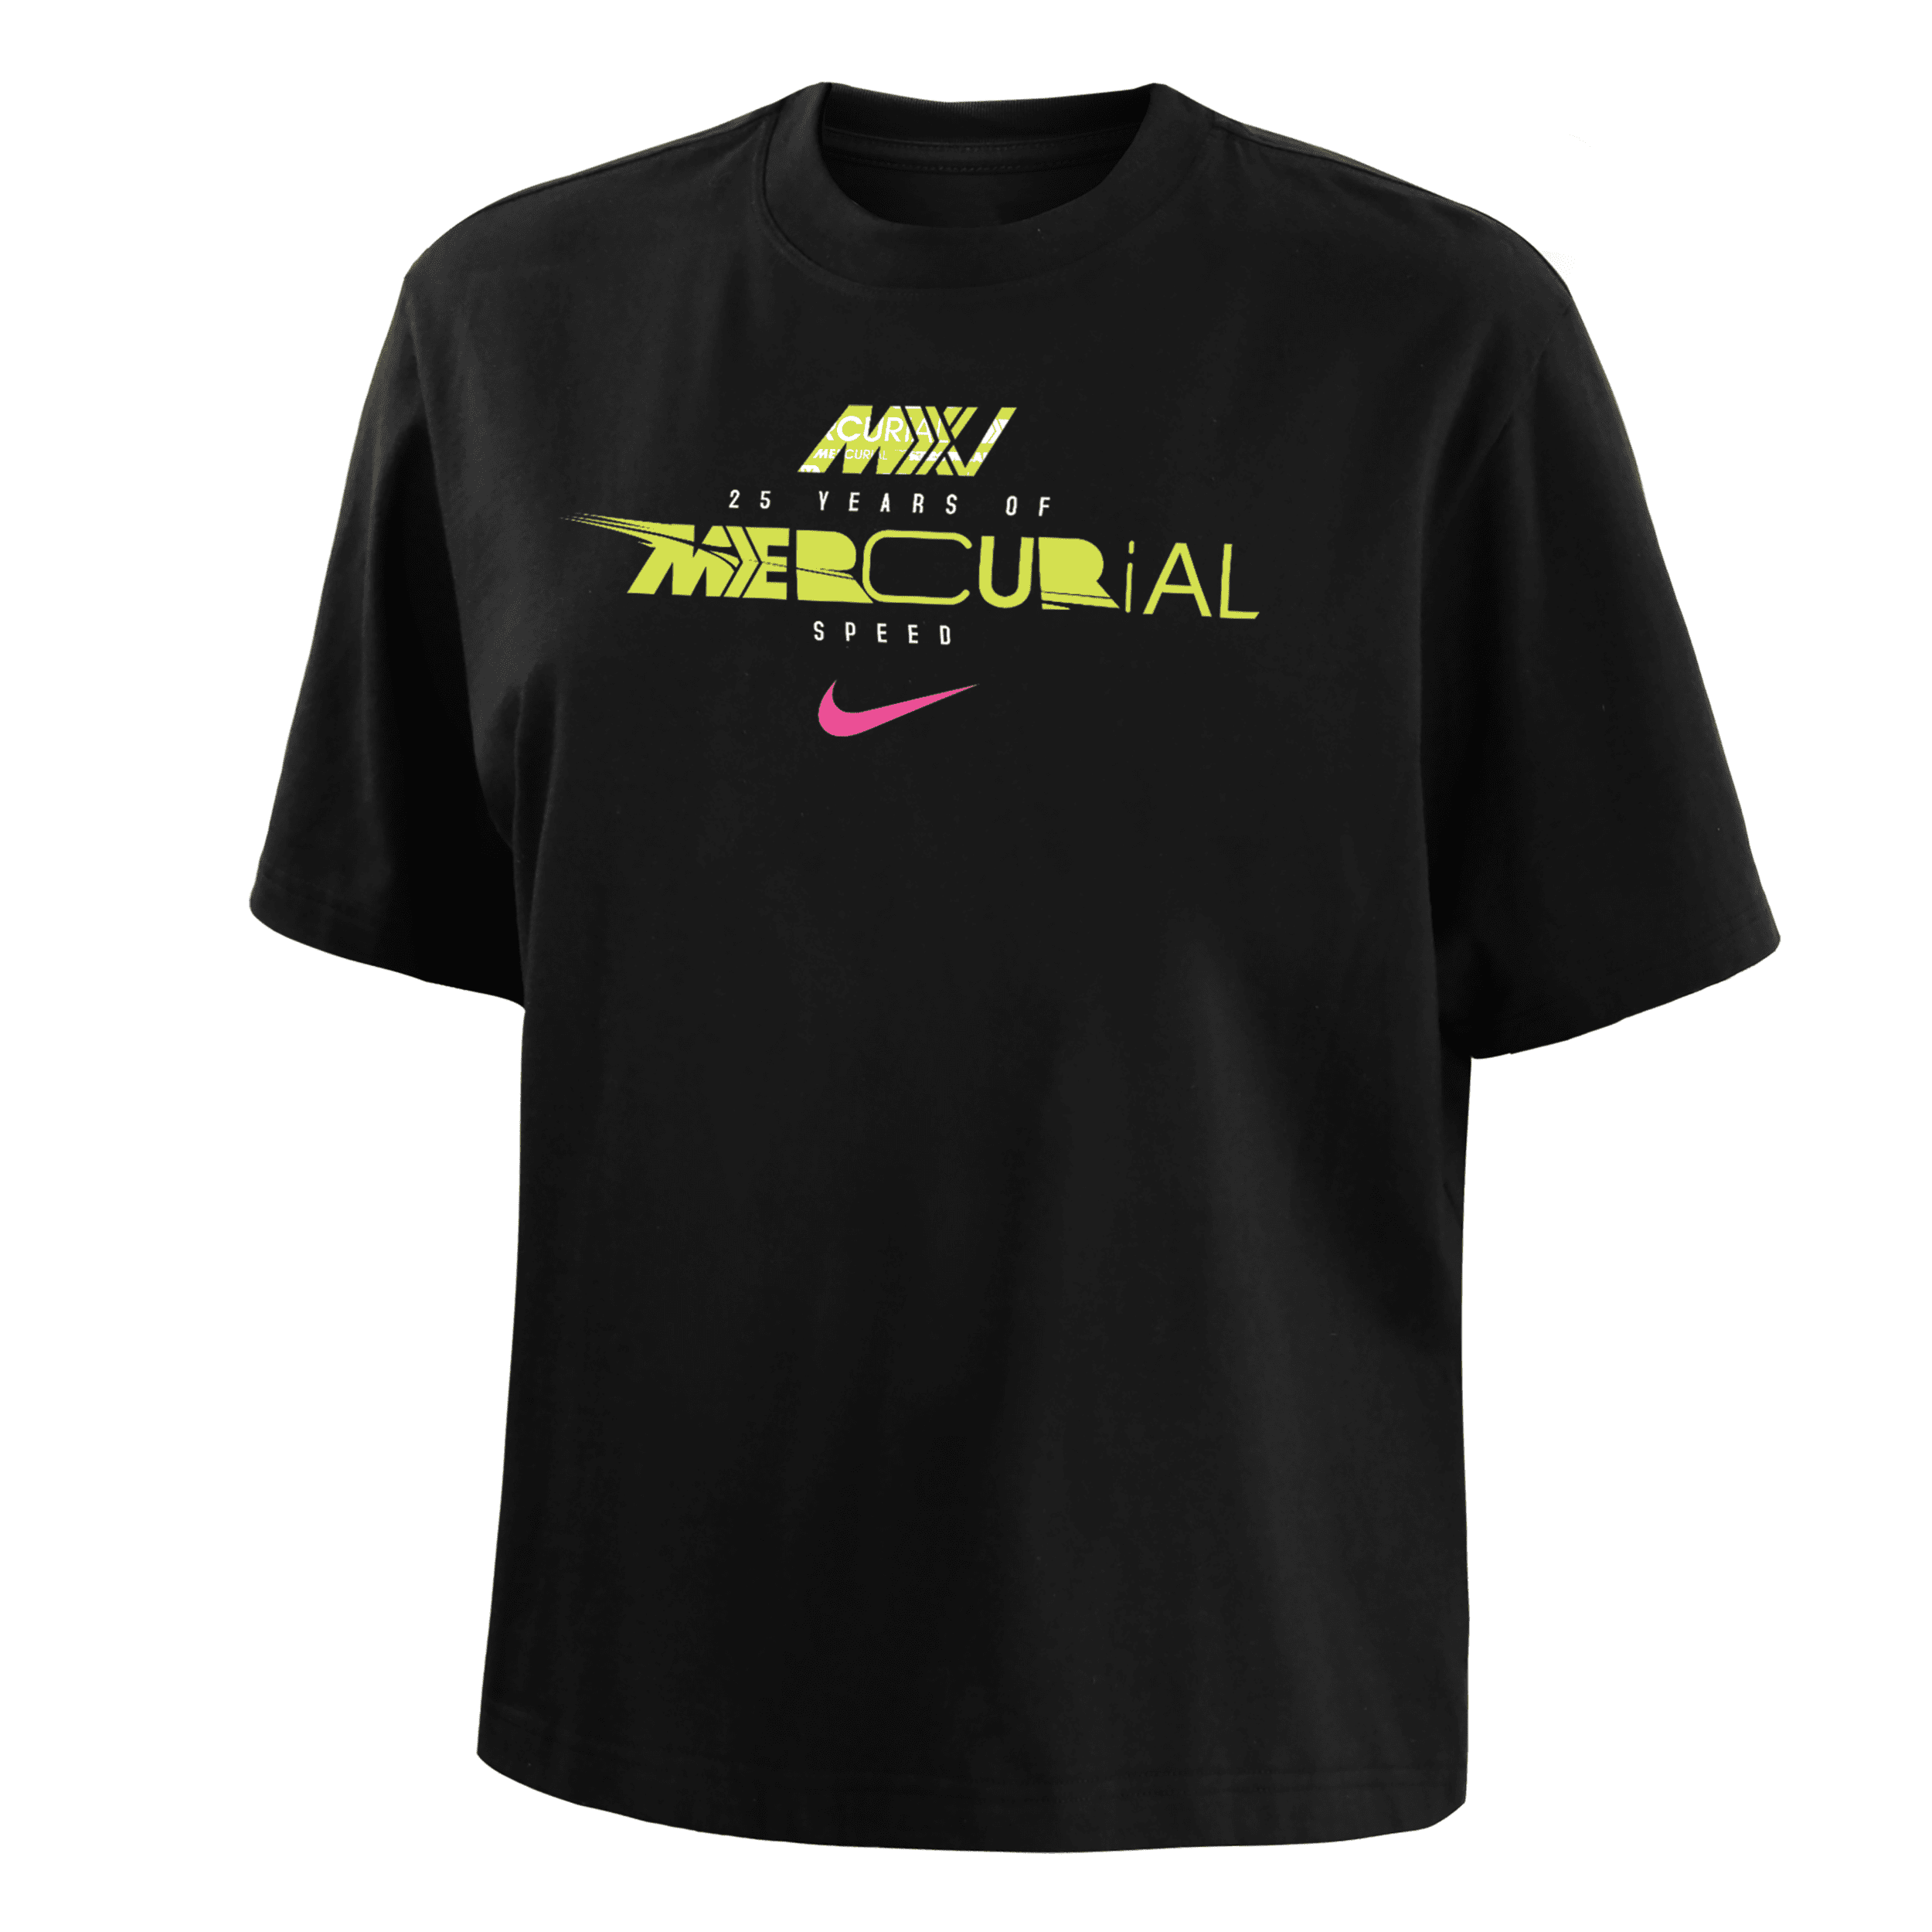 Nike Women's Mercurial 25th Anniversary T-shirt In Black